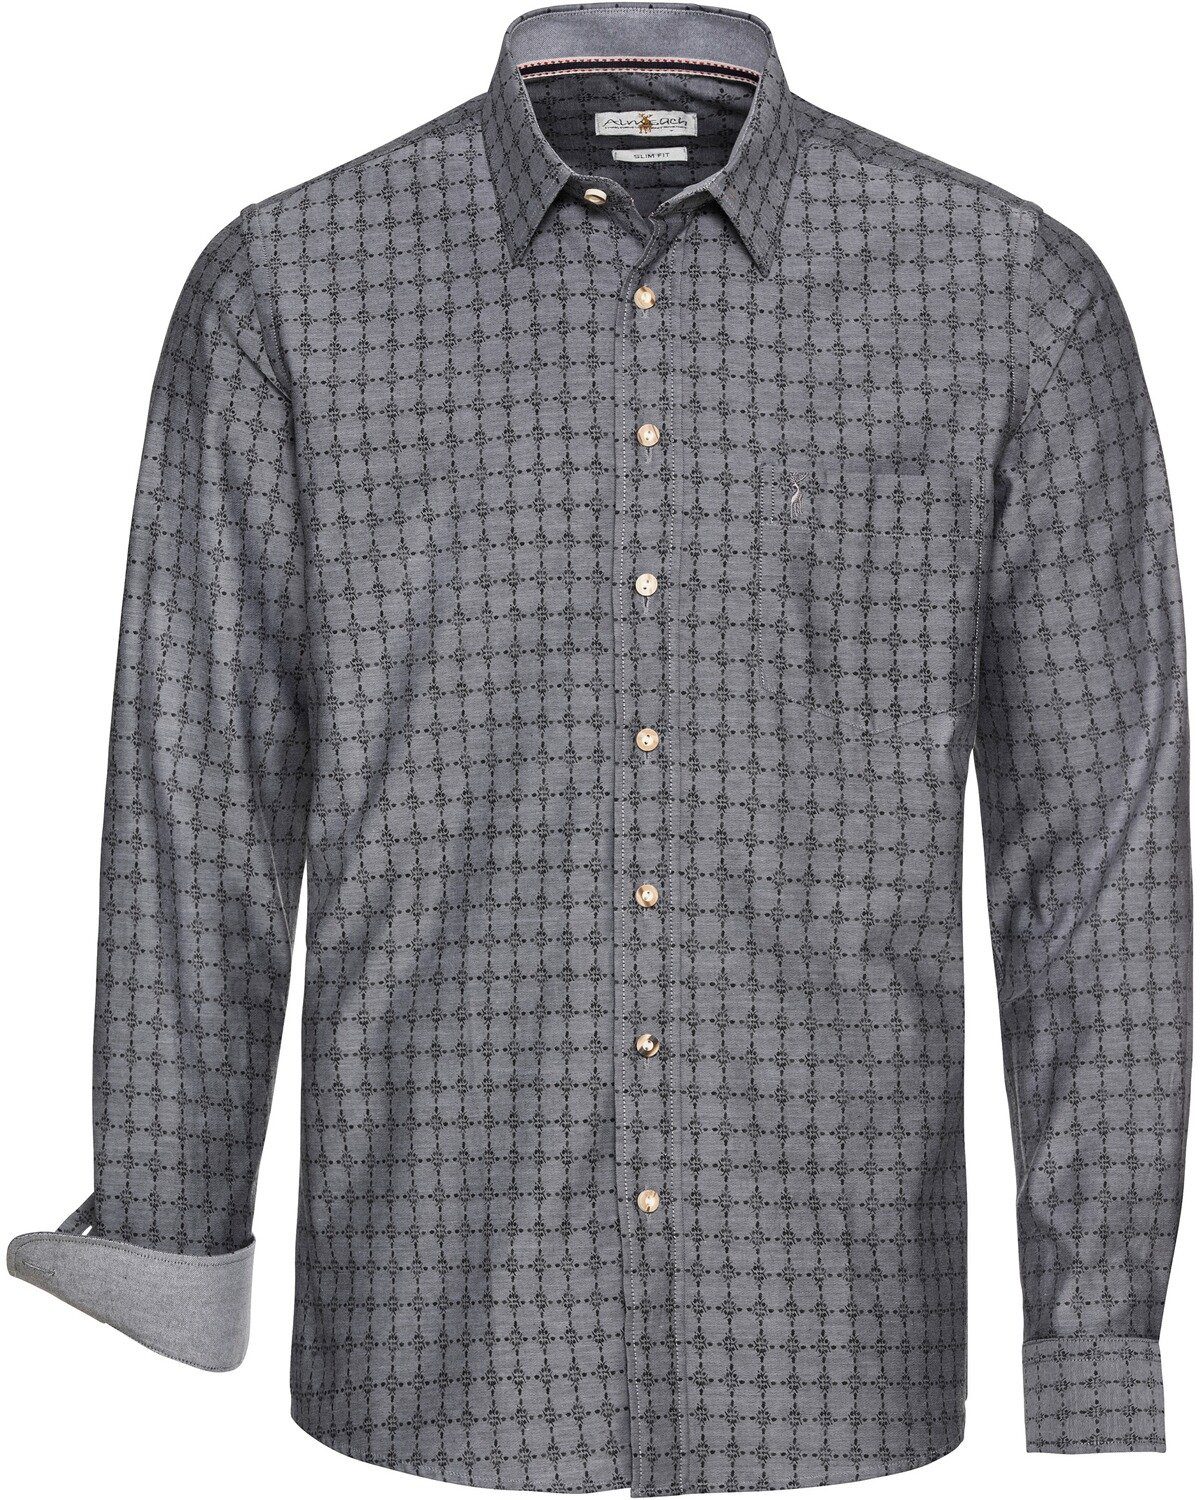 Almsach Trachtenhemd Hemd mit Karo-Jacquard-Muster